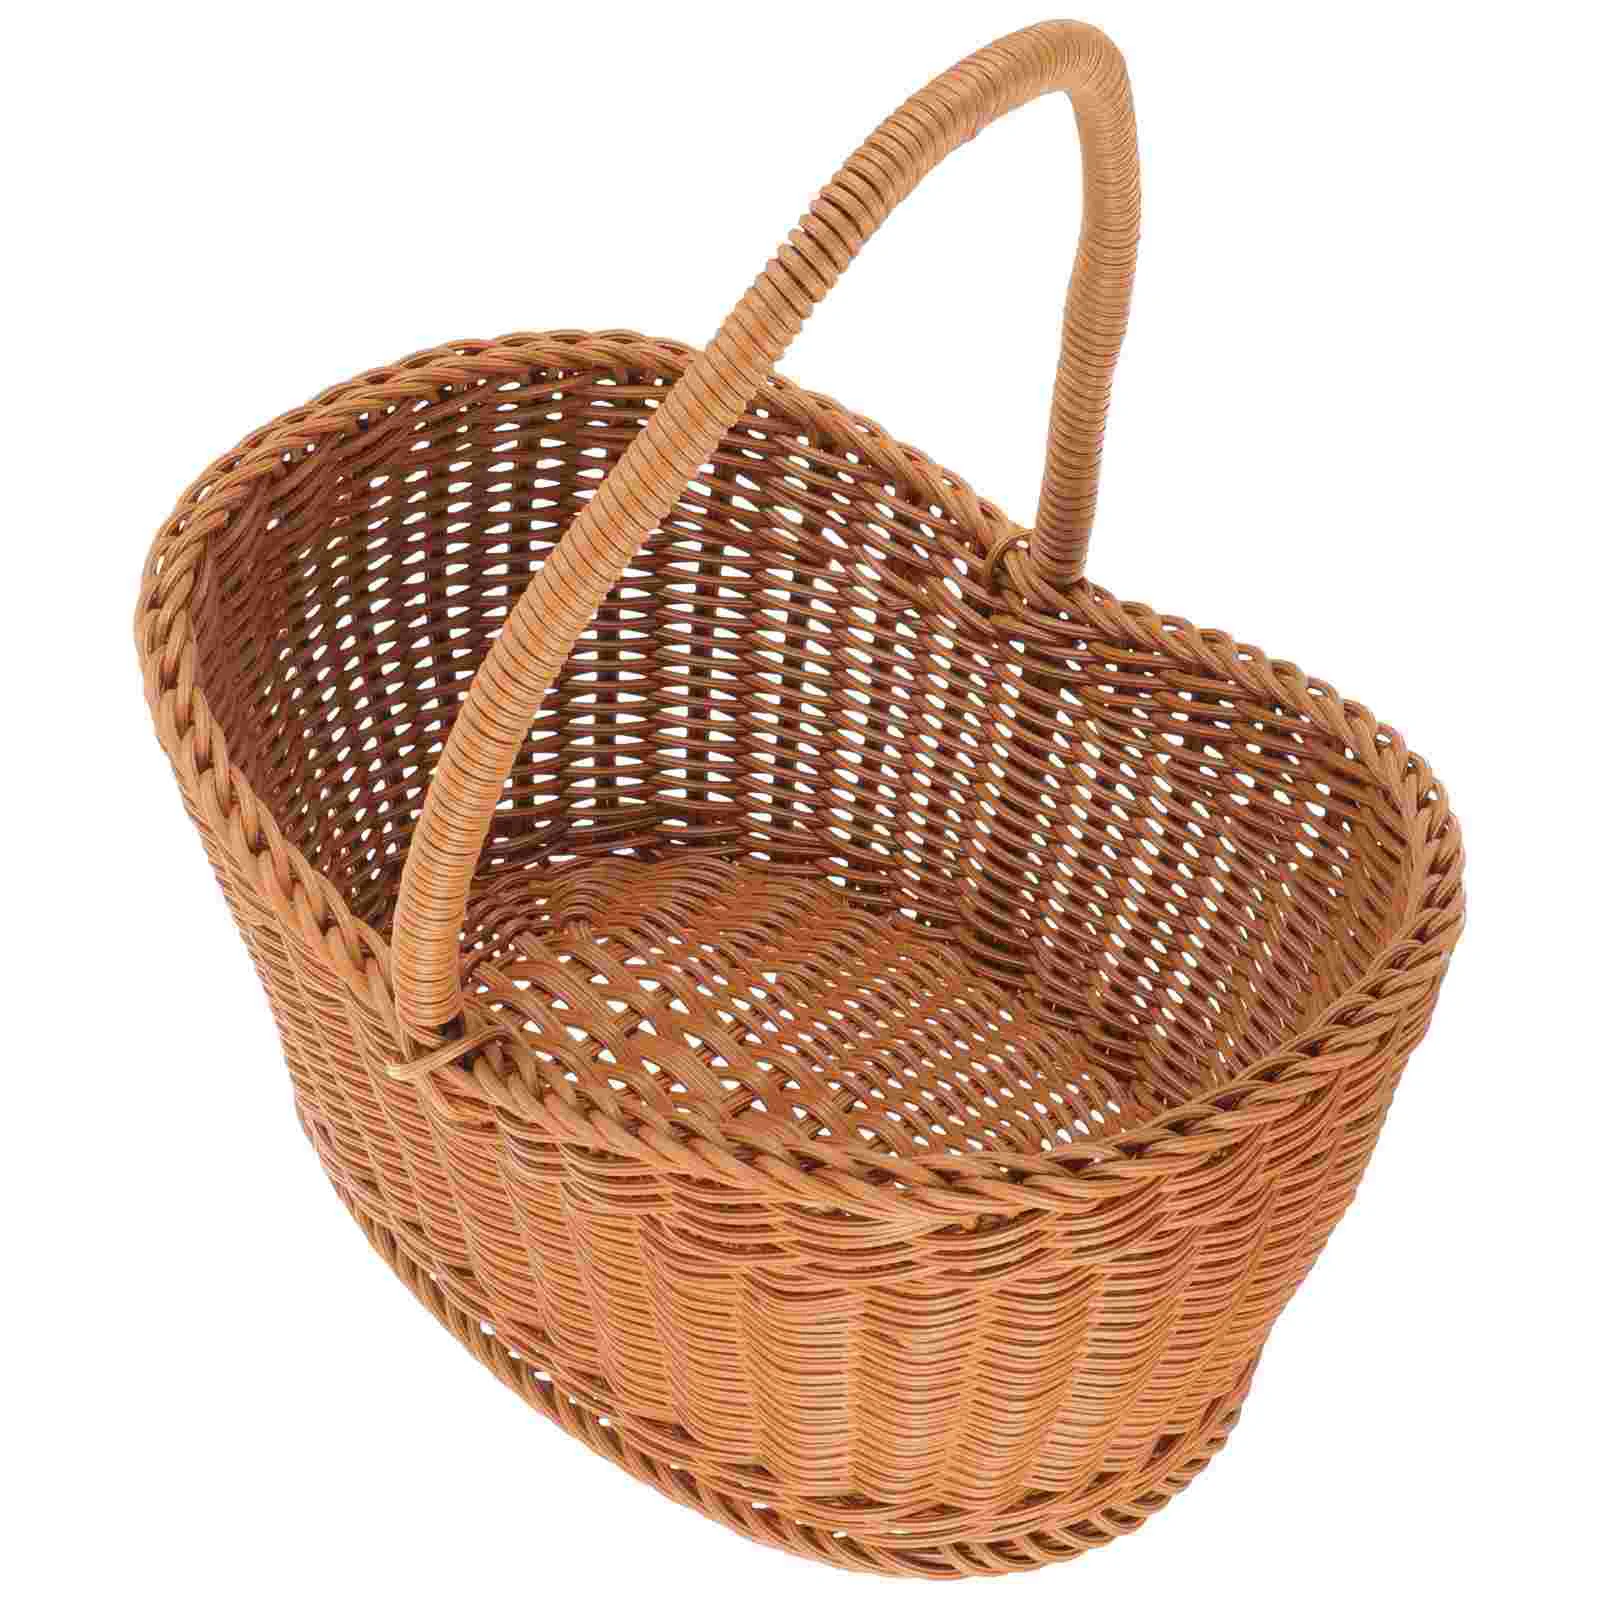 

Woven Hand Basket Hand-made Vegetable Camping Decor Imitation Rattan Baskets Storage Breads Holder Snacks Serving Fruits